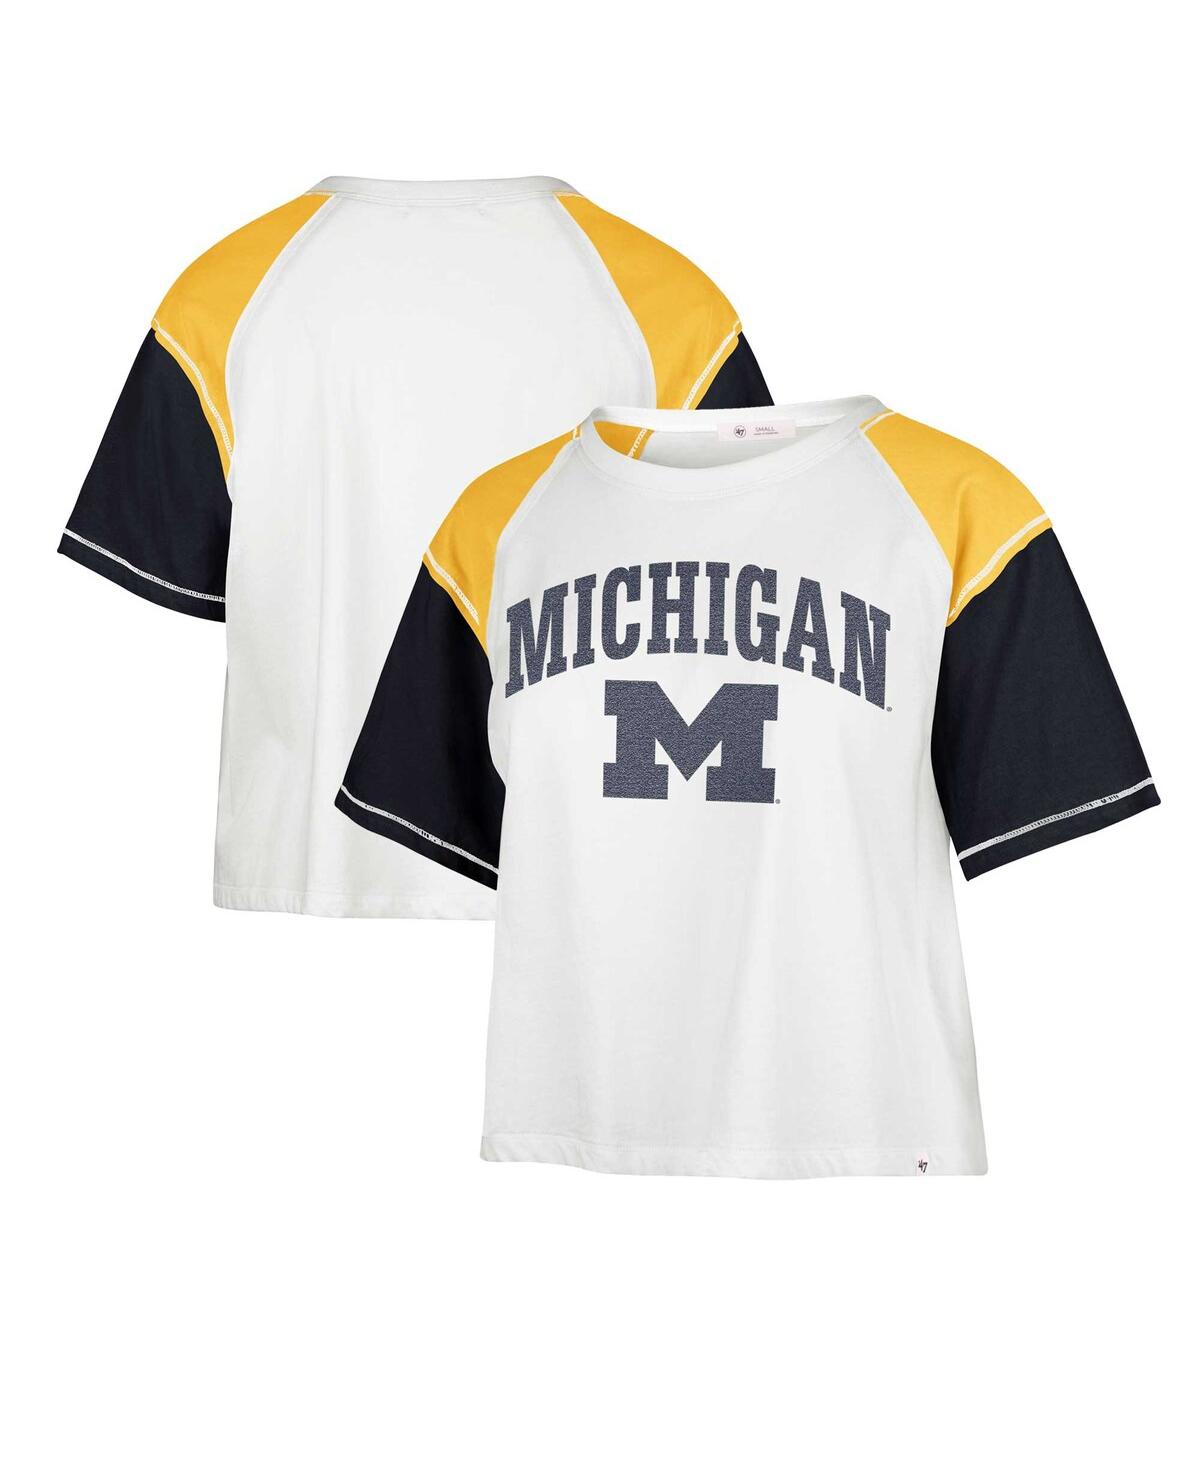 Women's '47 Brand White Distressed Michigan Wolverines Serenity Gia Cropped T-shirt - White